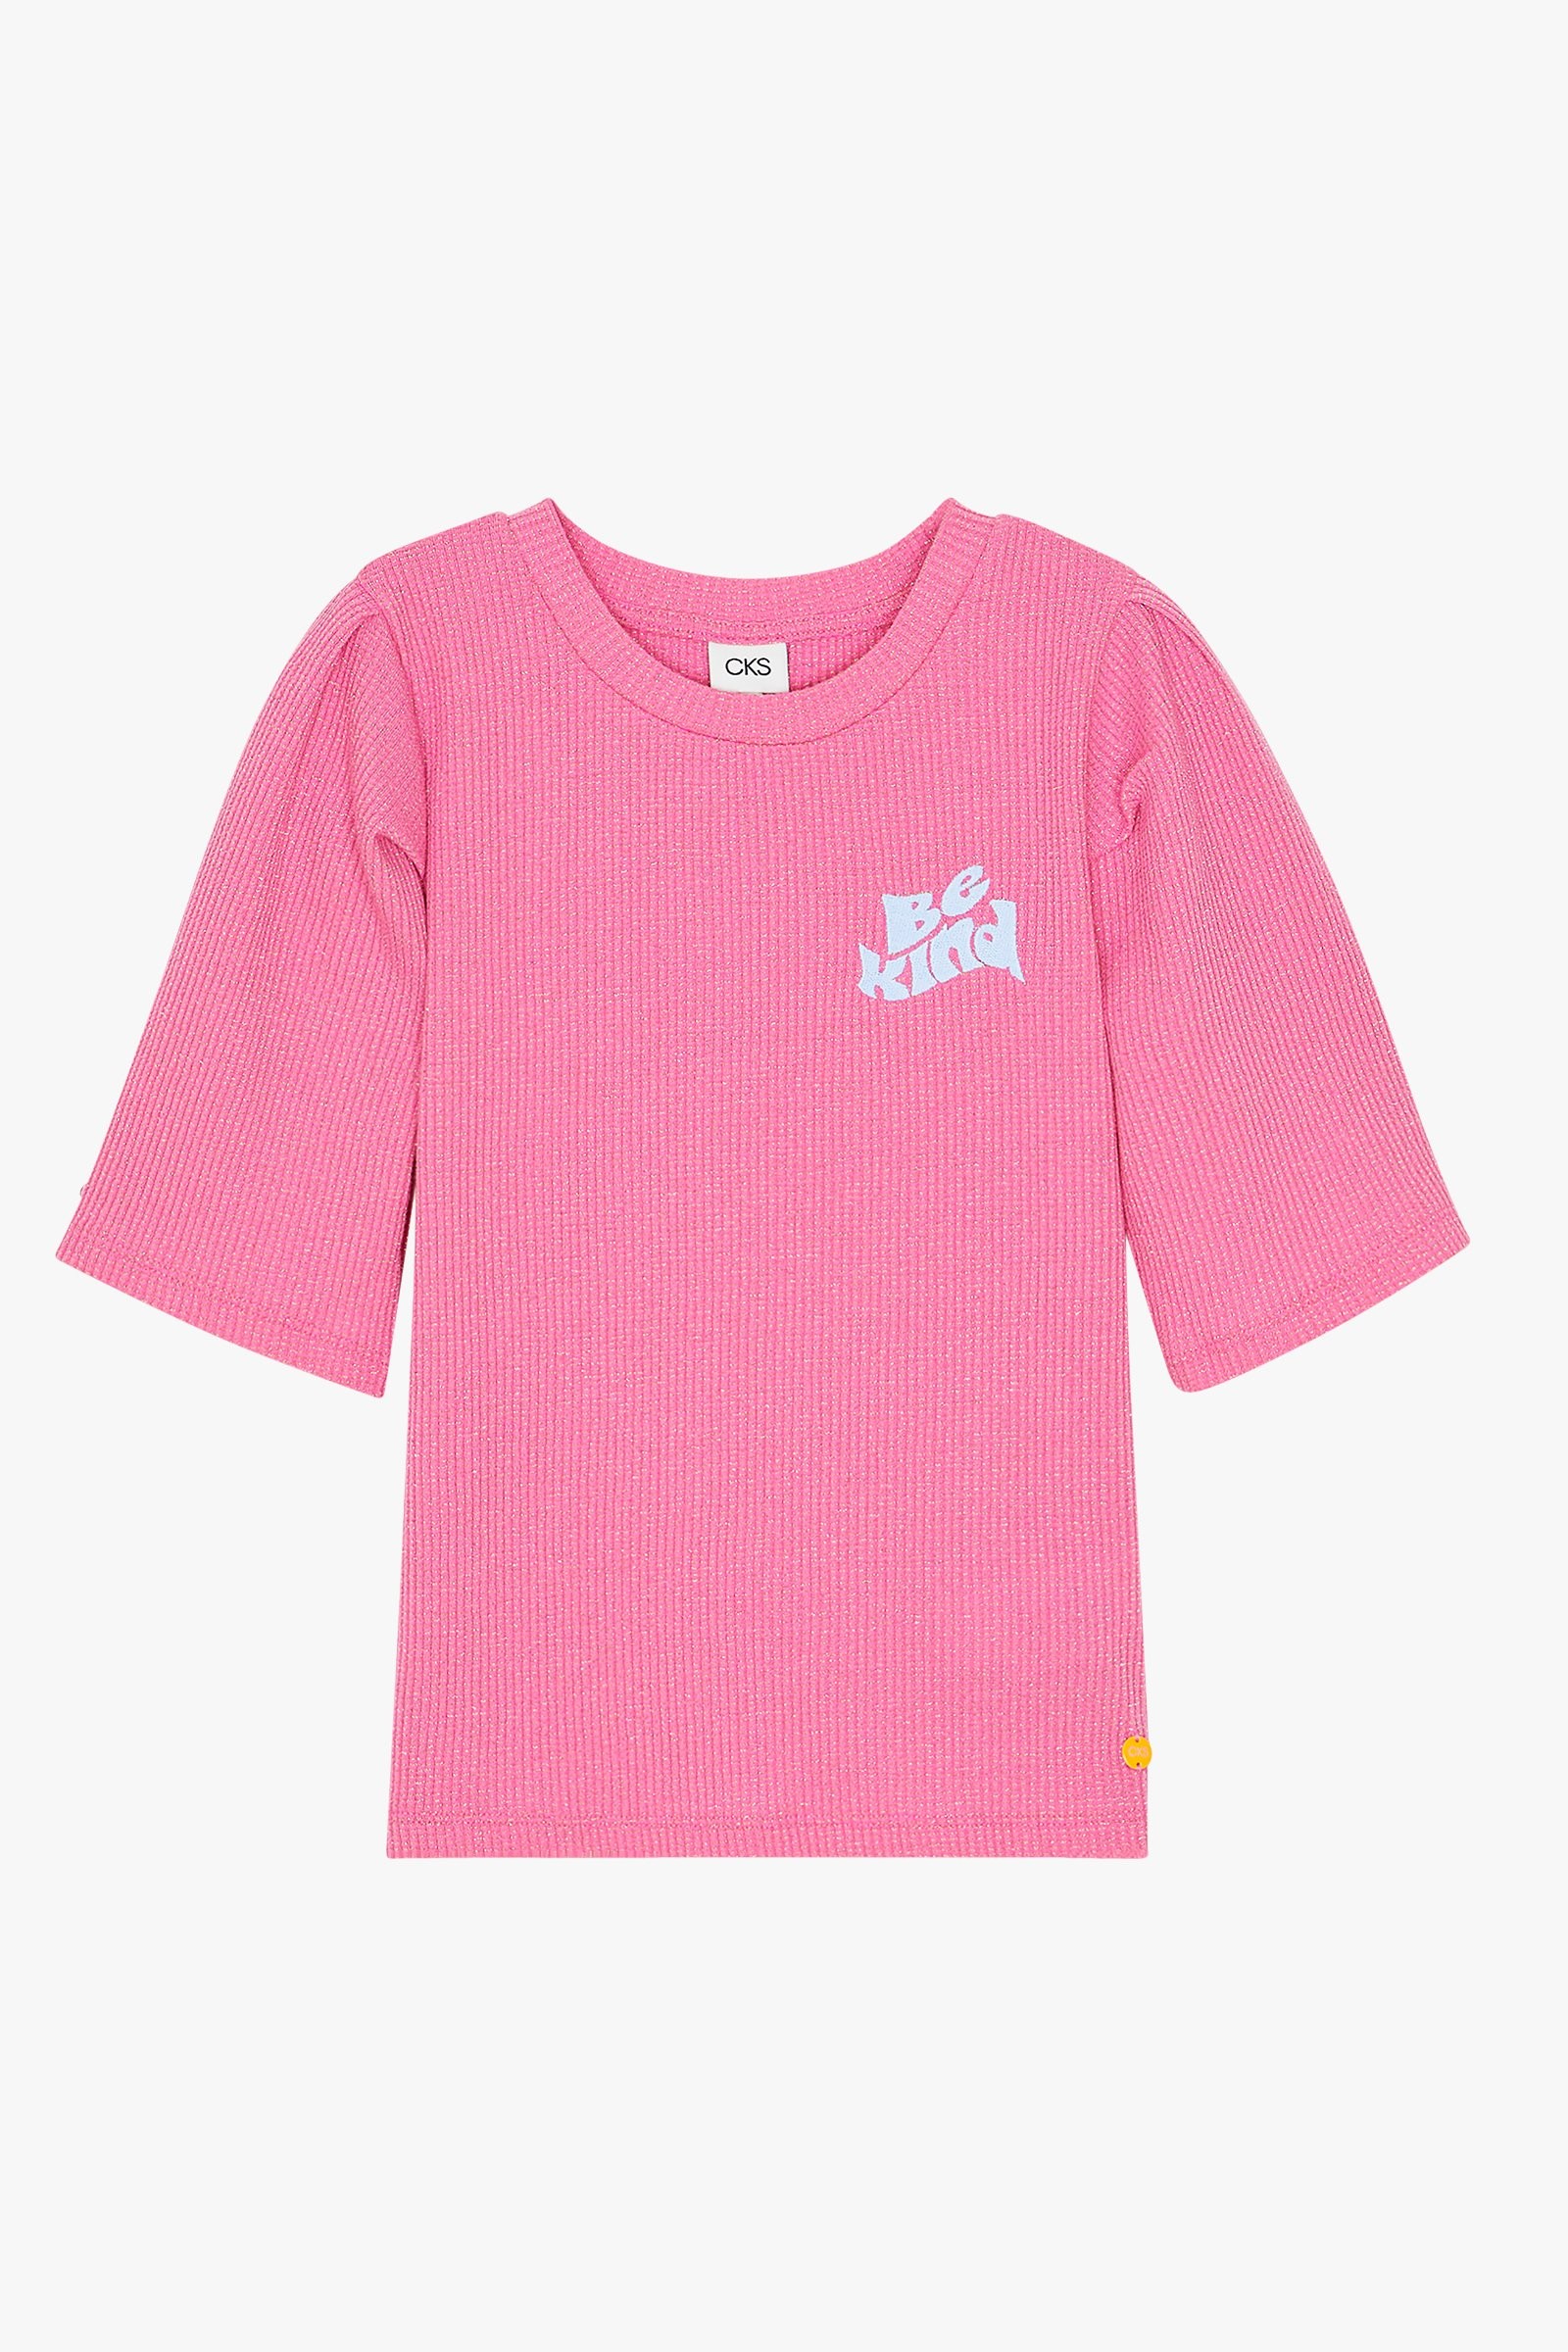 CKS Kids - ESIS - t-shirt à manches courtes - rose vif